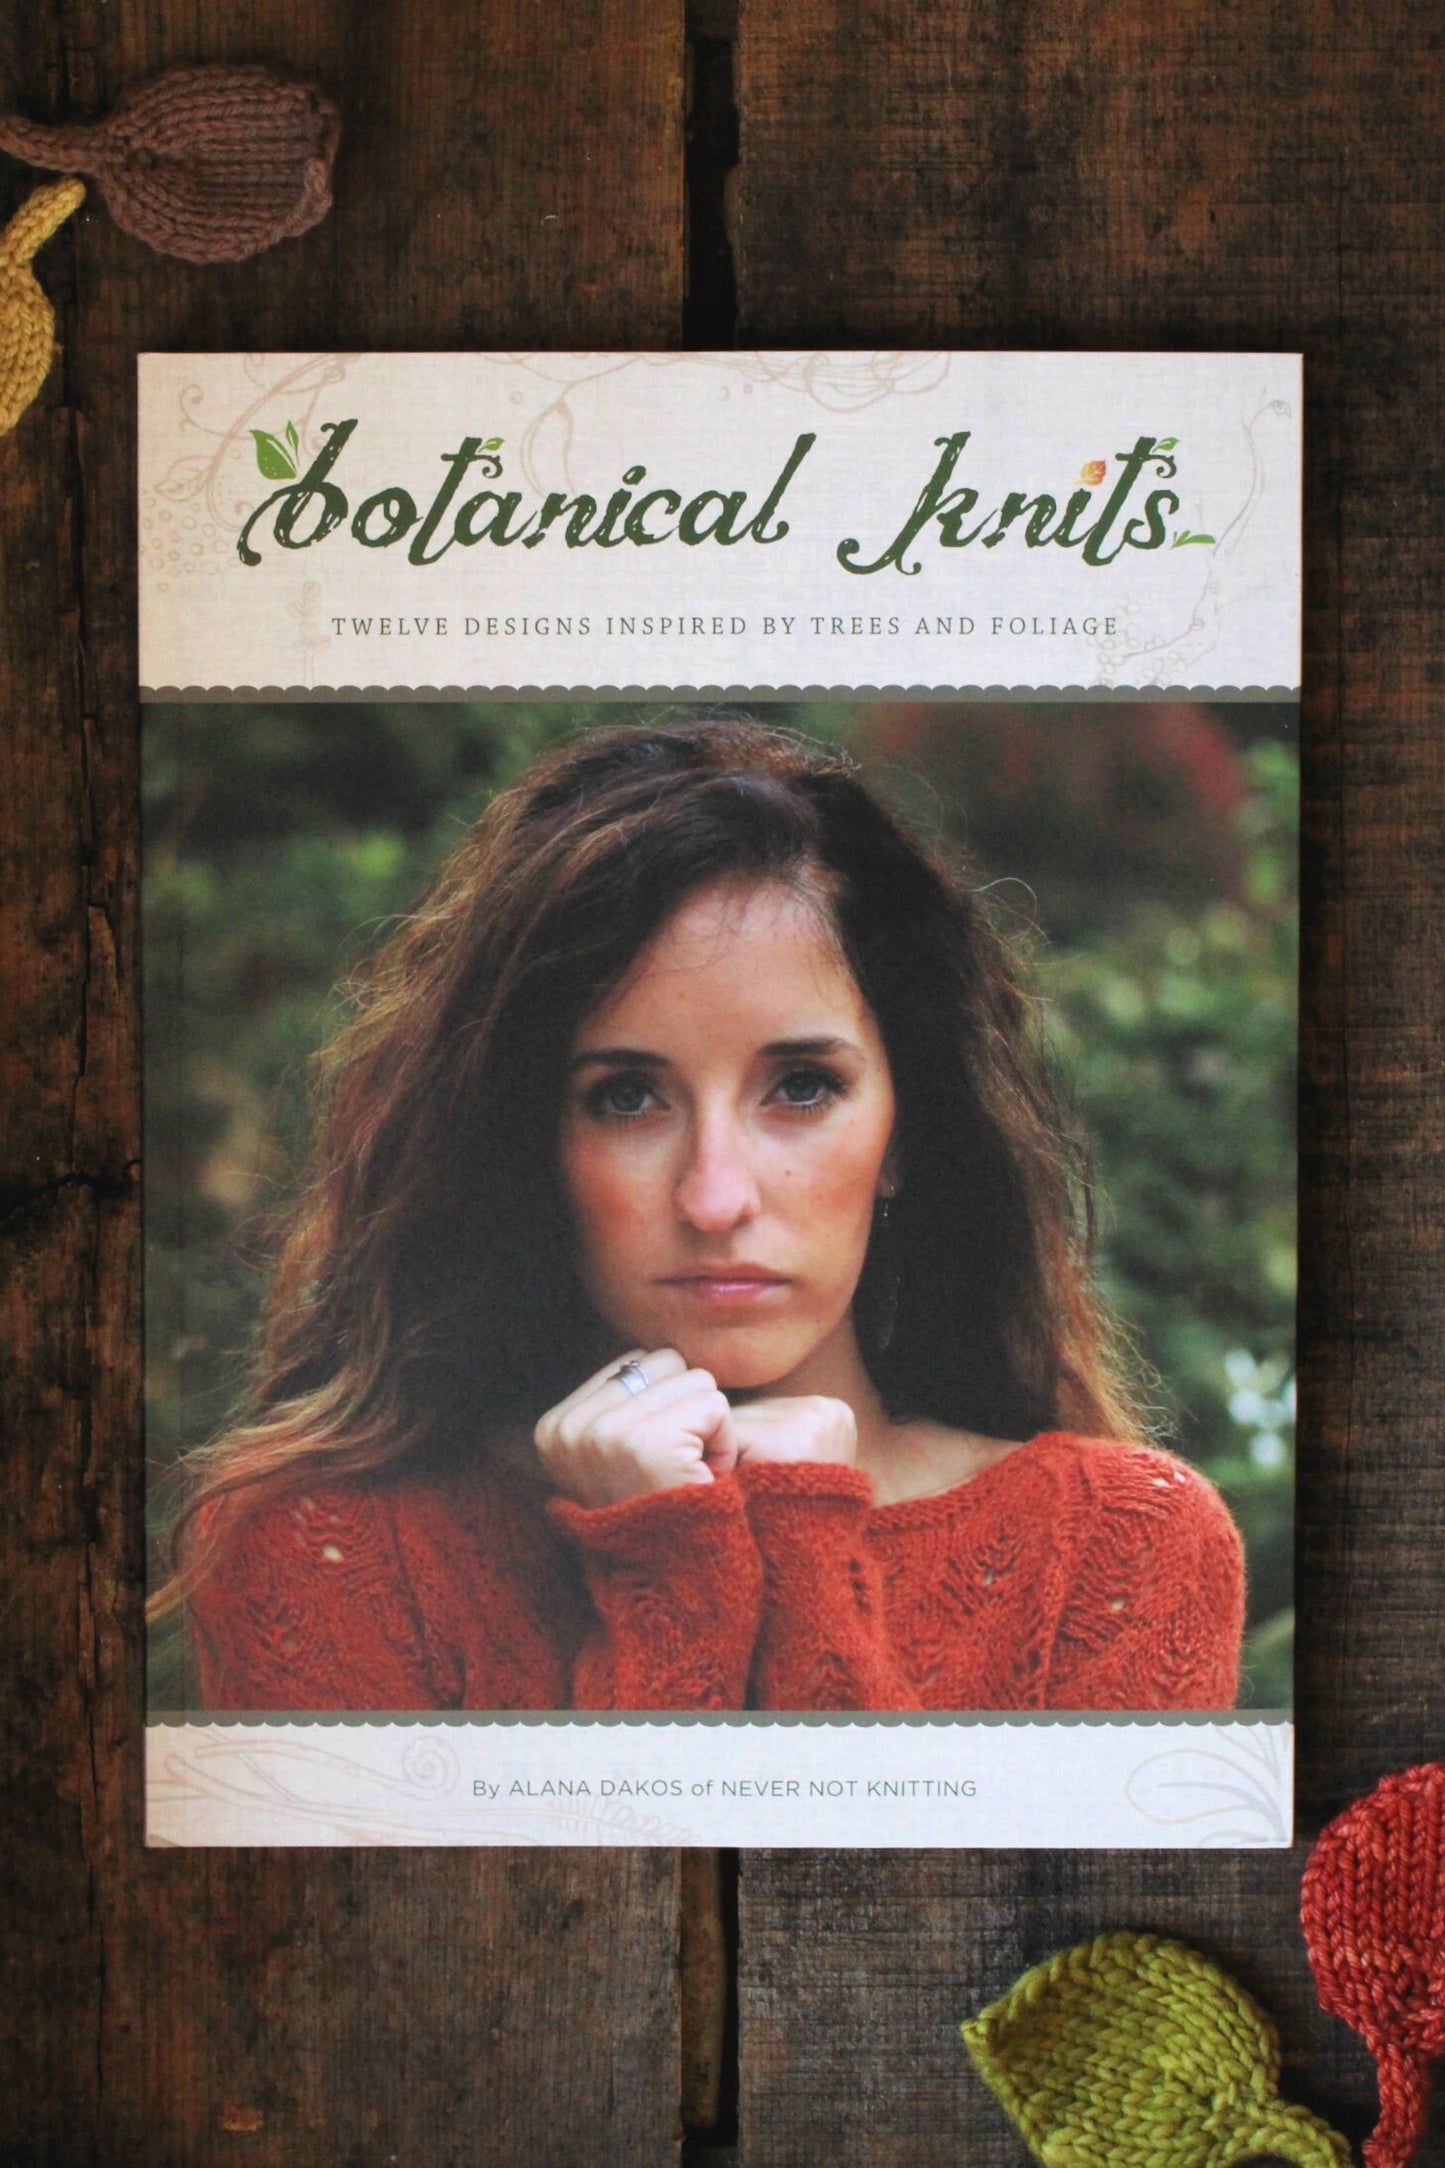 Knitting Book • Botanical Knits Book Bundle • Knitting Gift • Intermediate Knitting Patterns